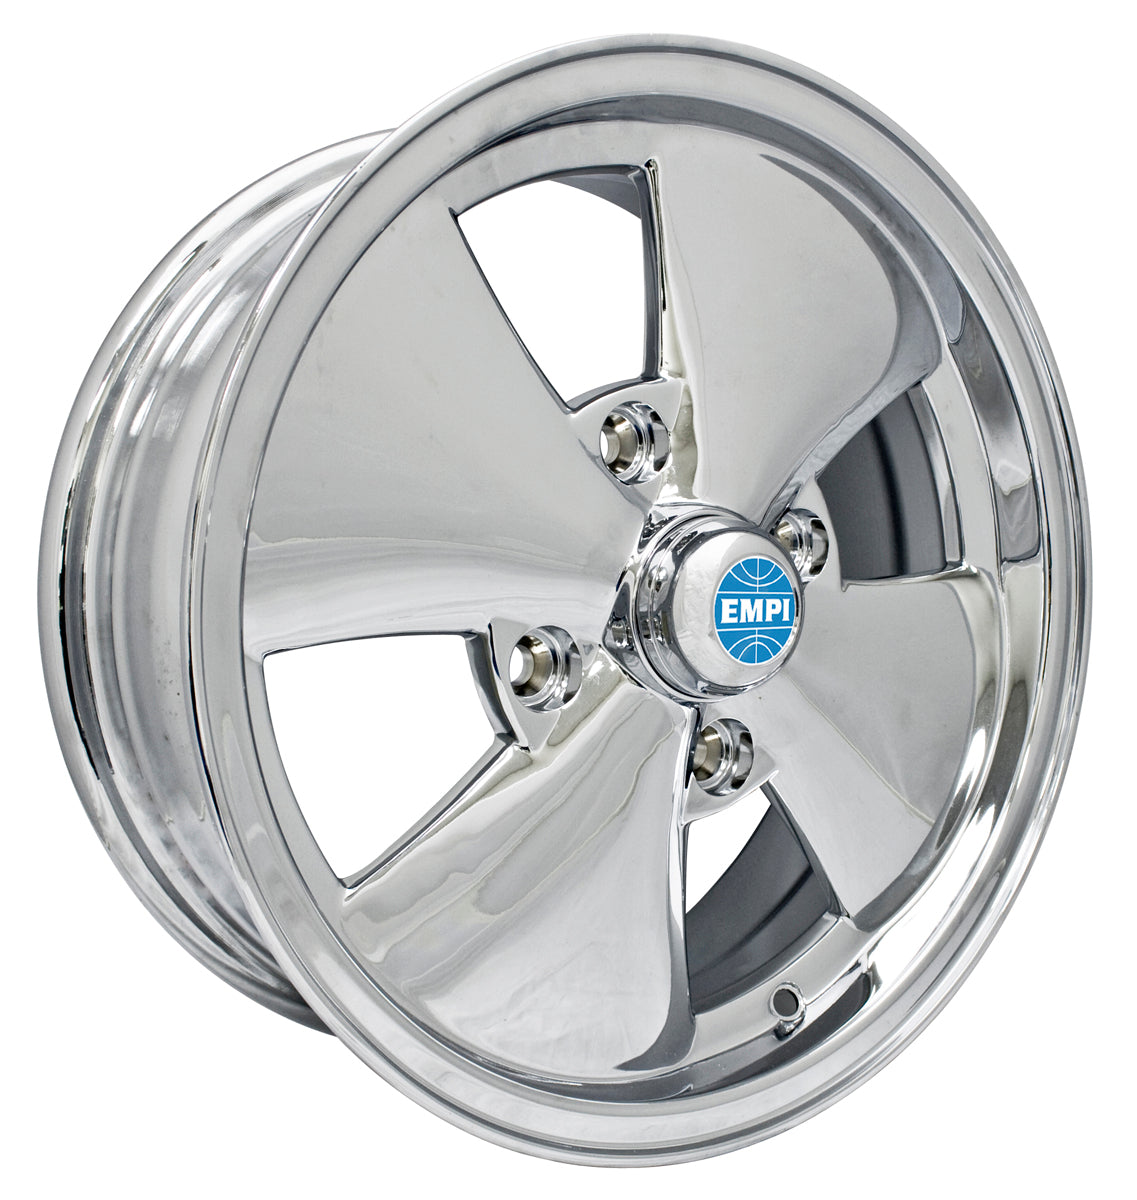 EMPI 4-Spoke Wheel, 4x130 Chrome